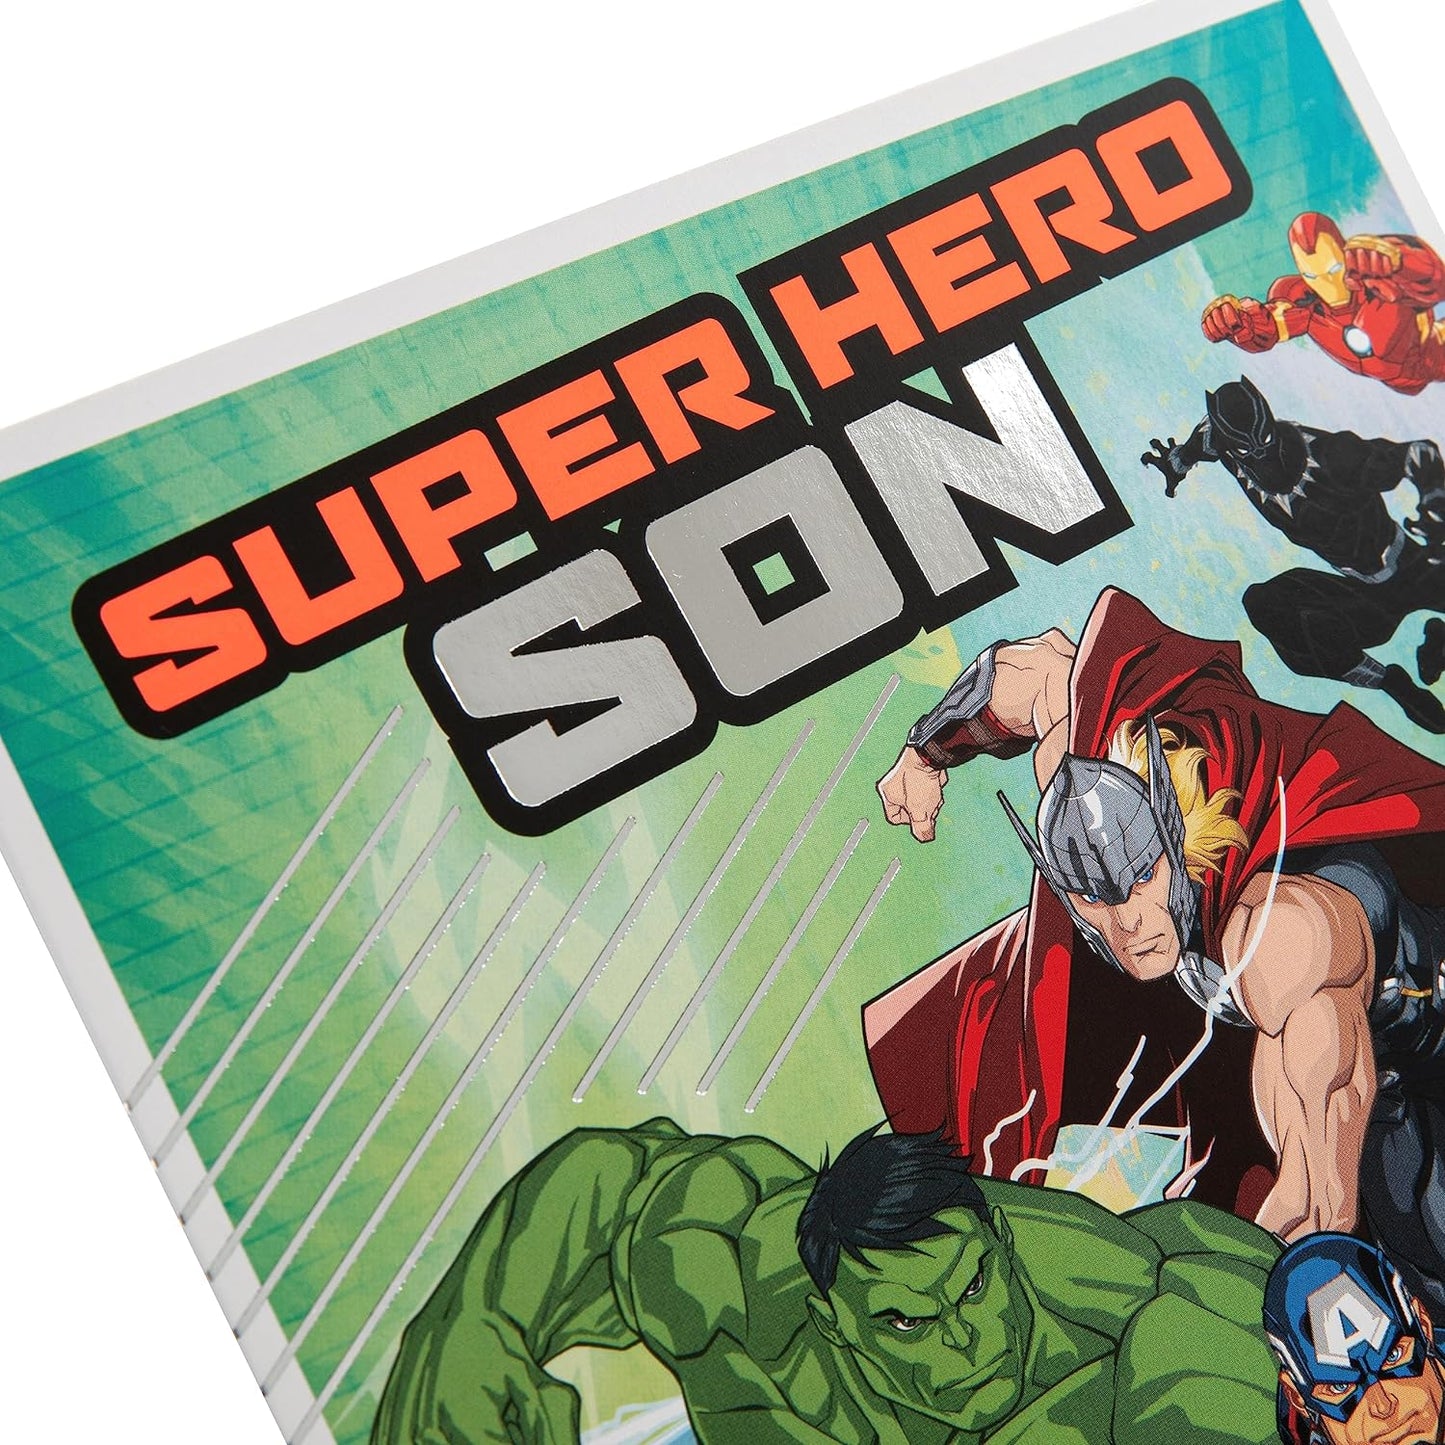 Marvel Superheroes Design with Activity Son Birthday Card